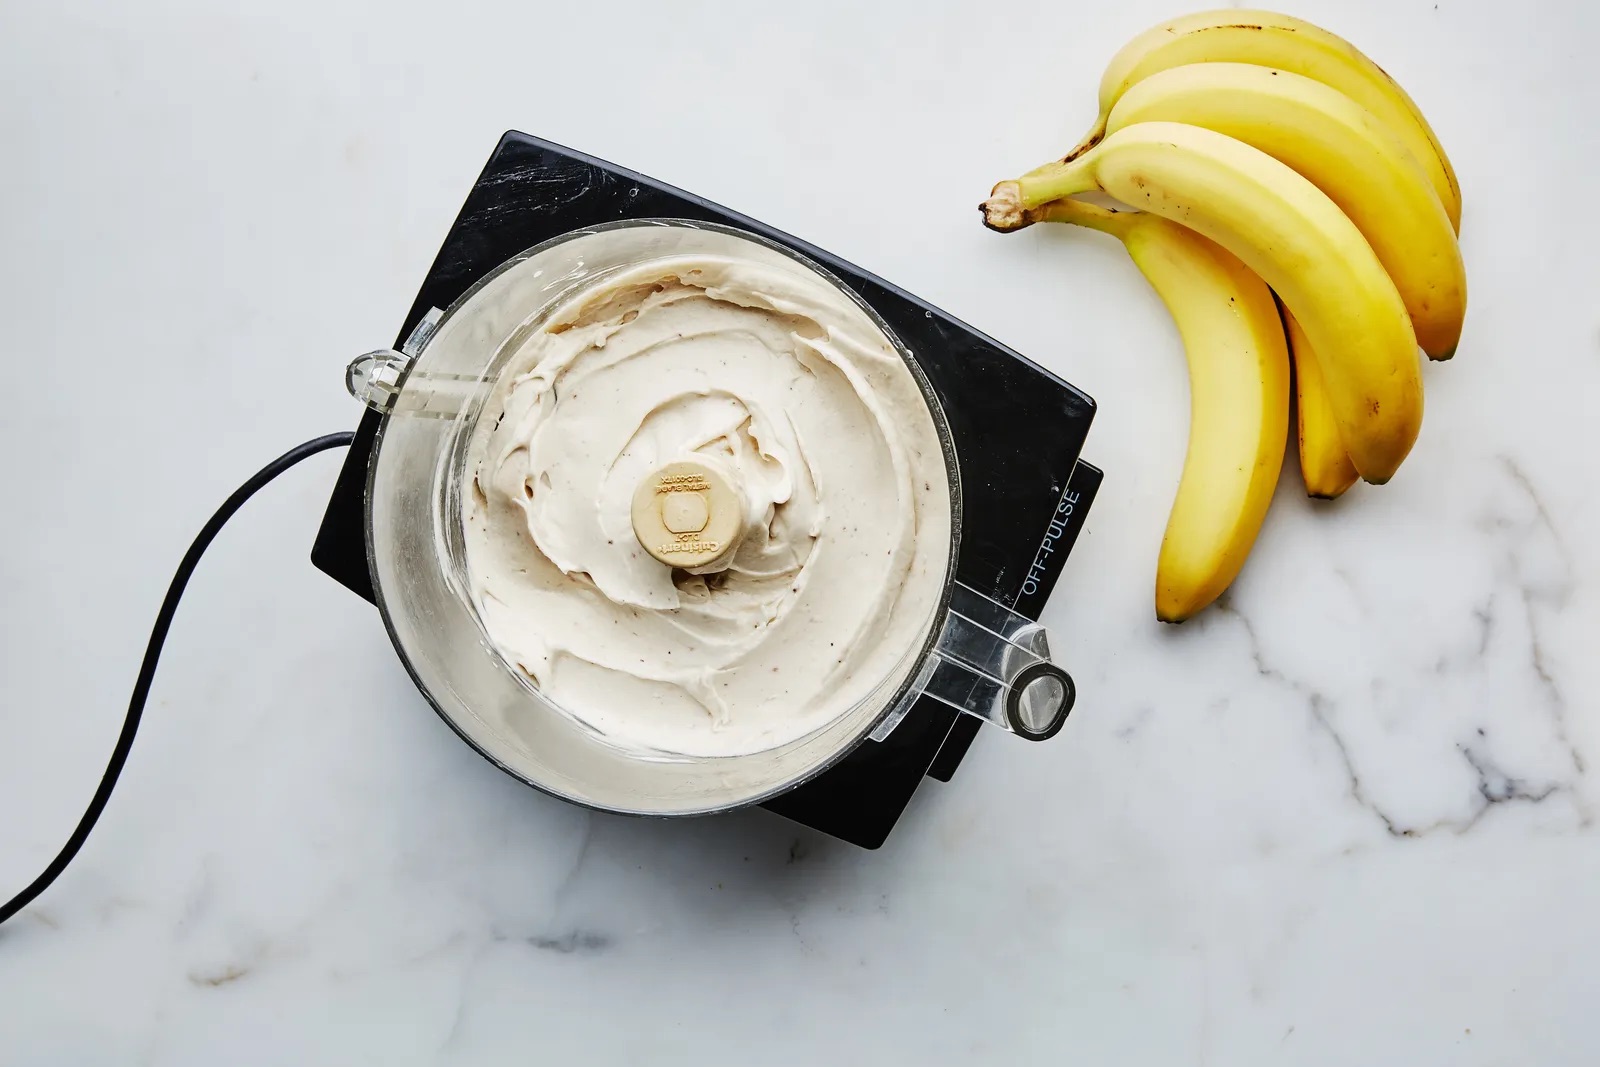 How To Make Banana Ice Cream In Food Processor